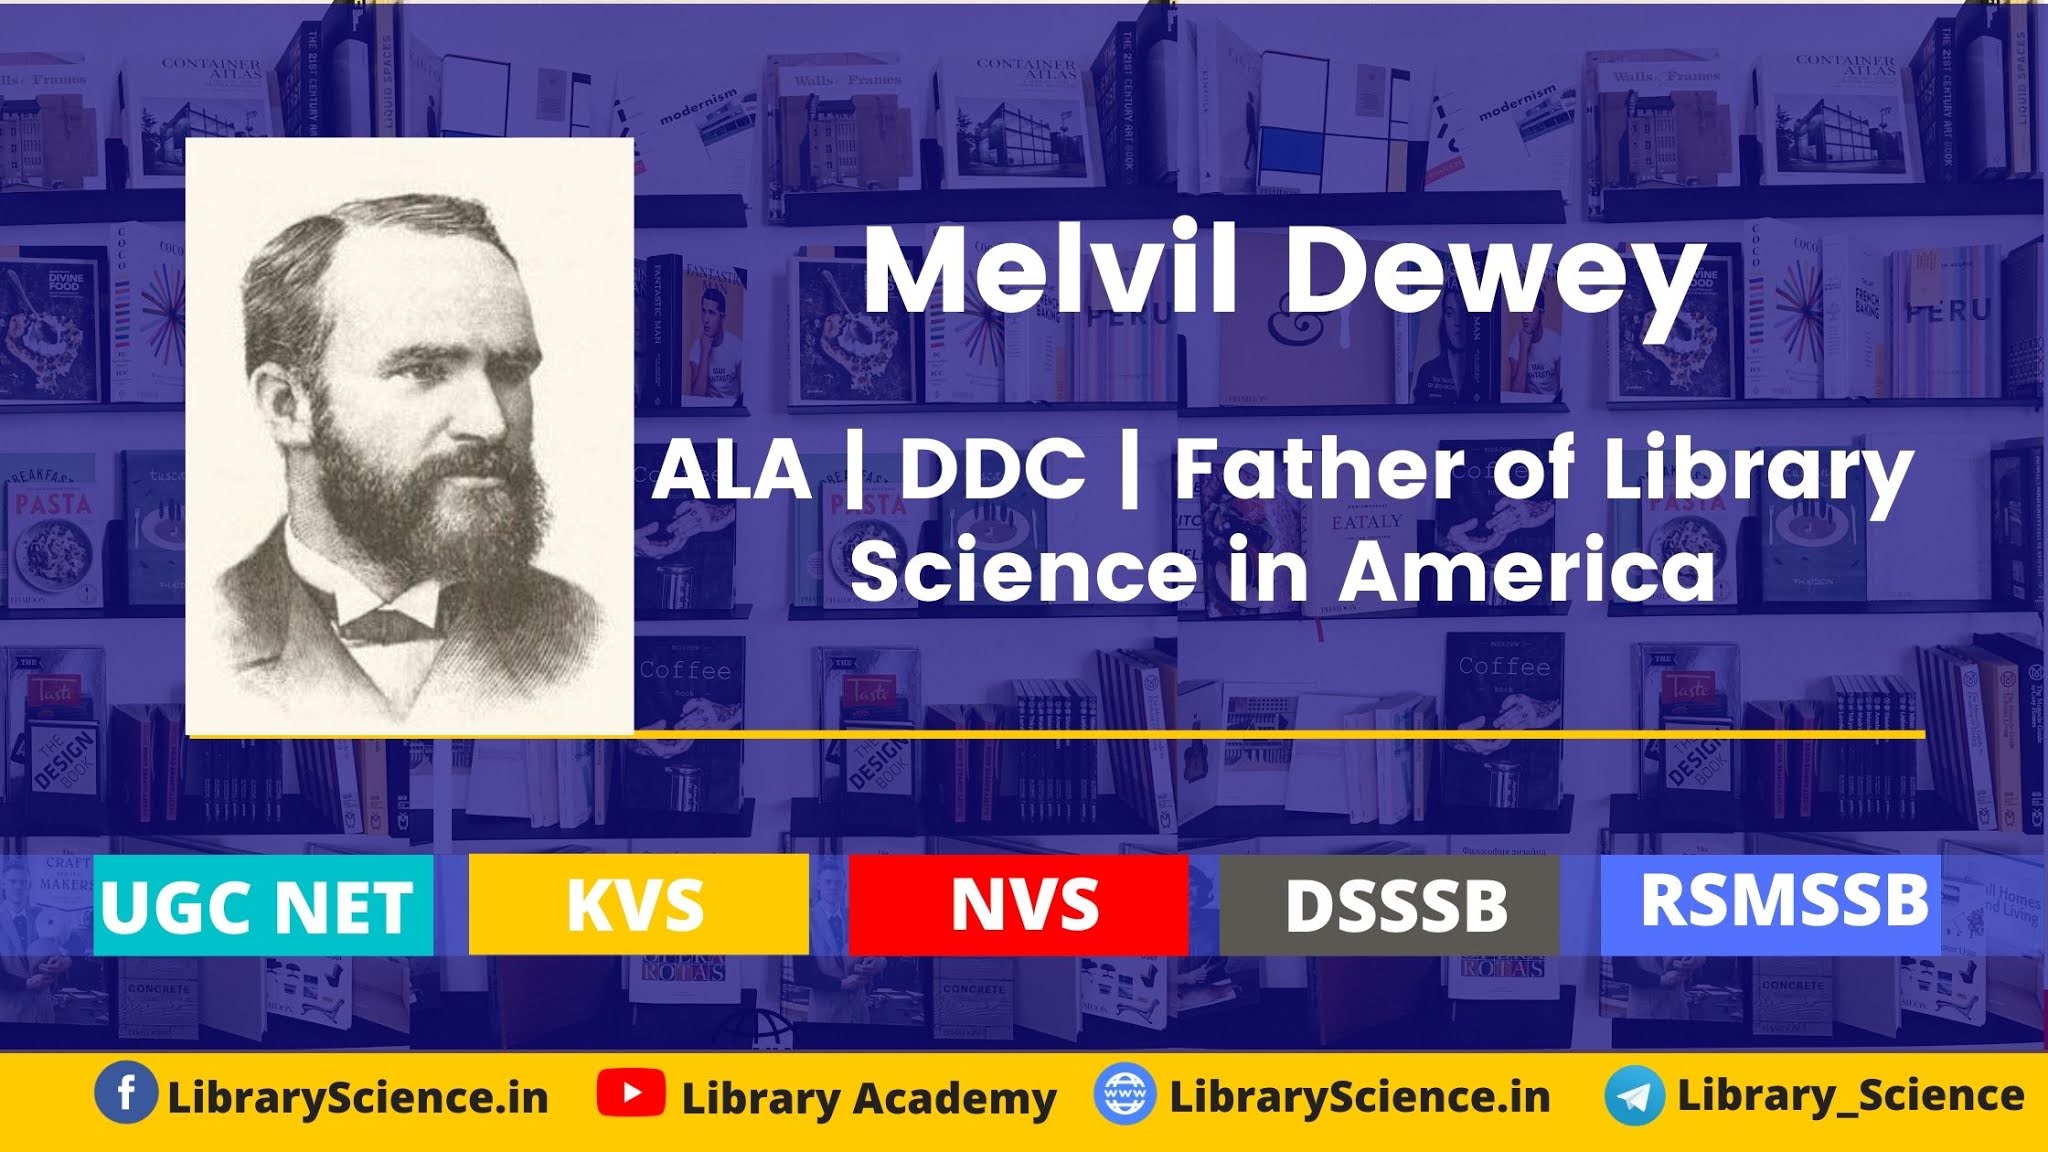 Melvil Dewey Biography & Contribution for DDC & ALA